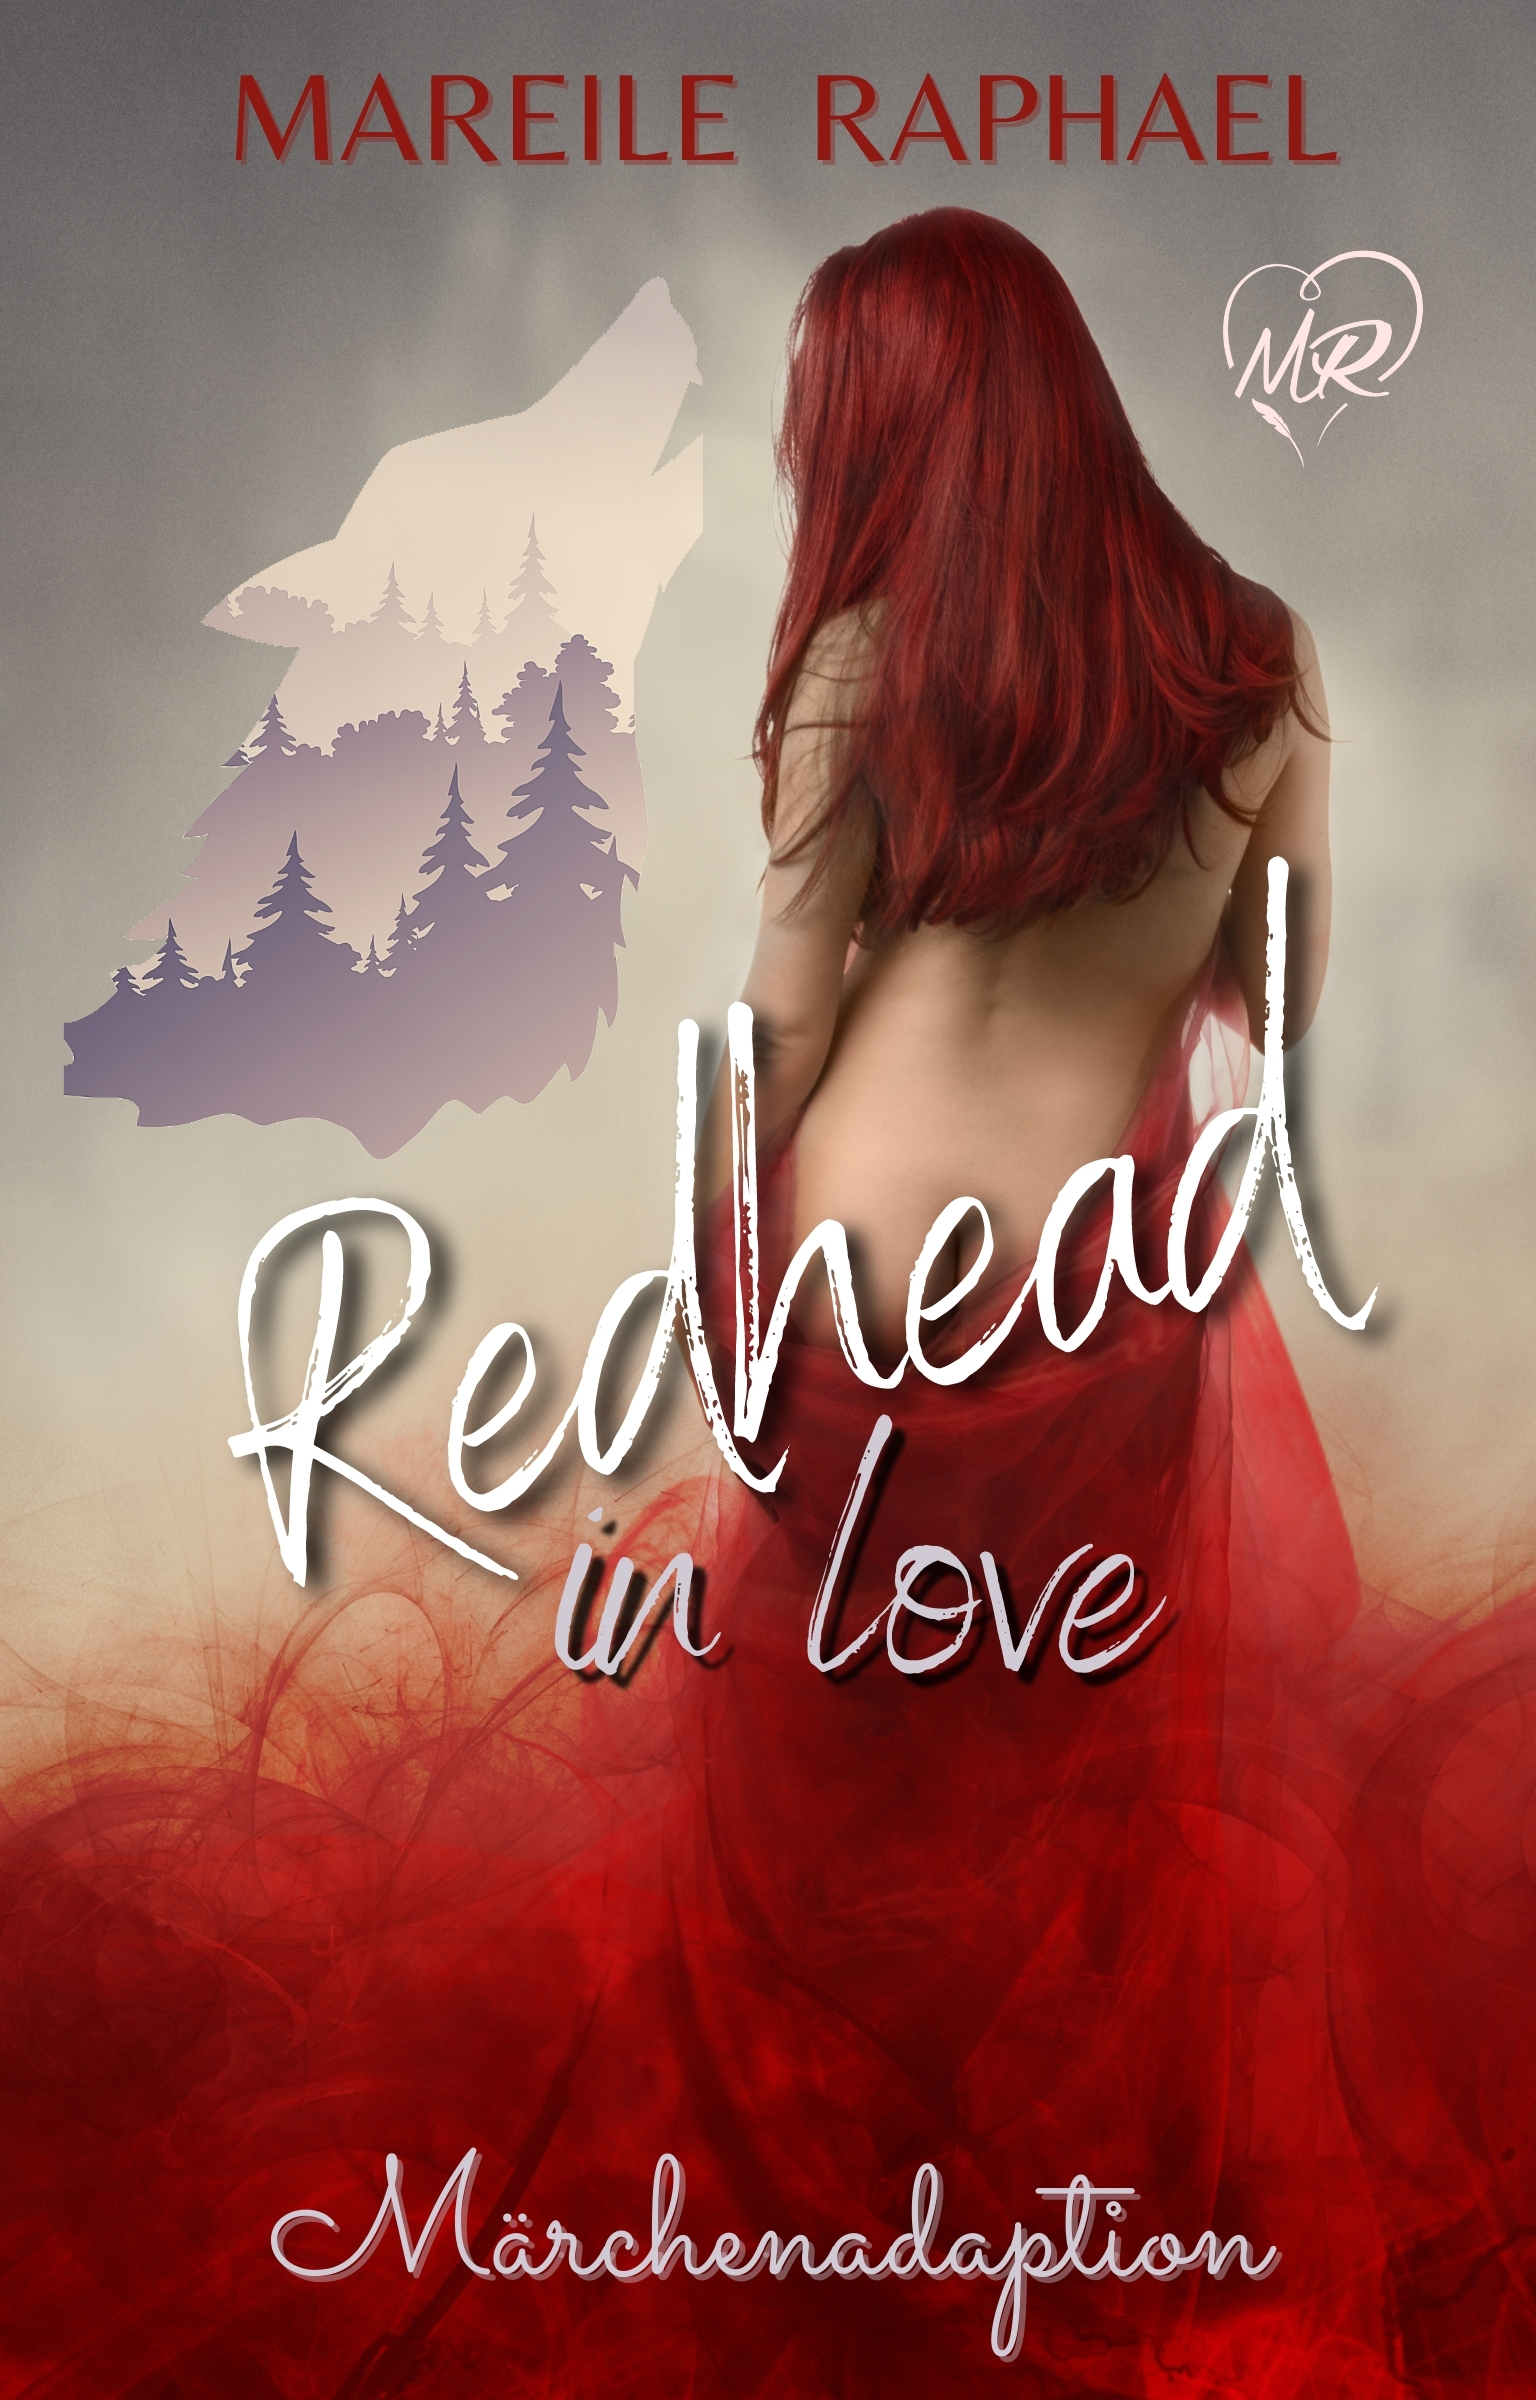 Redhead in love